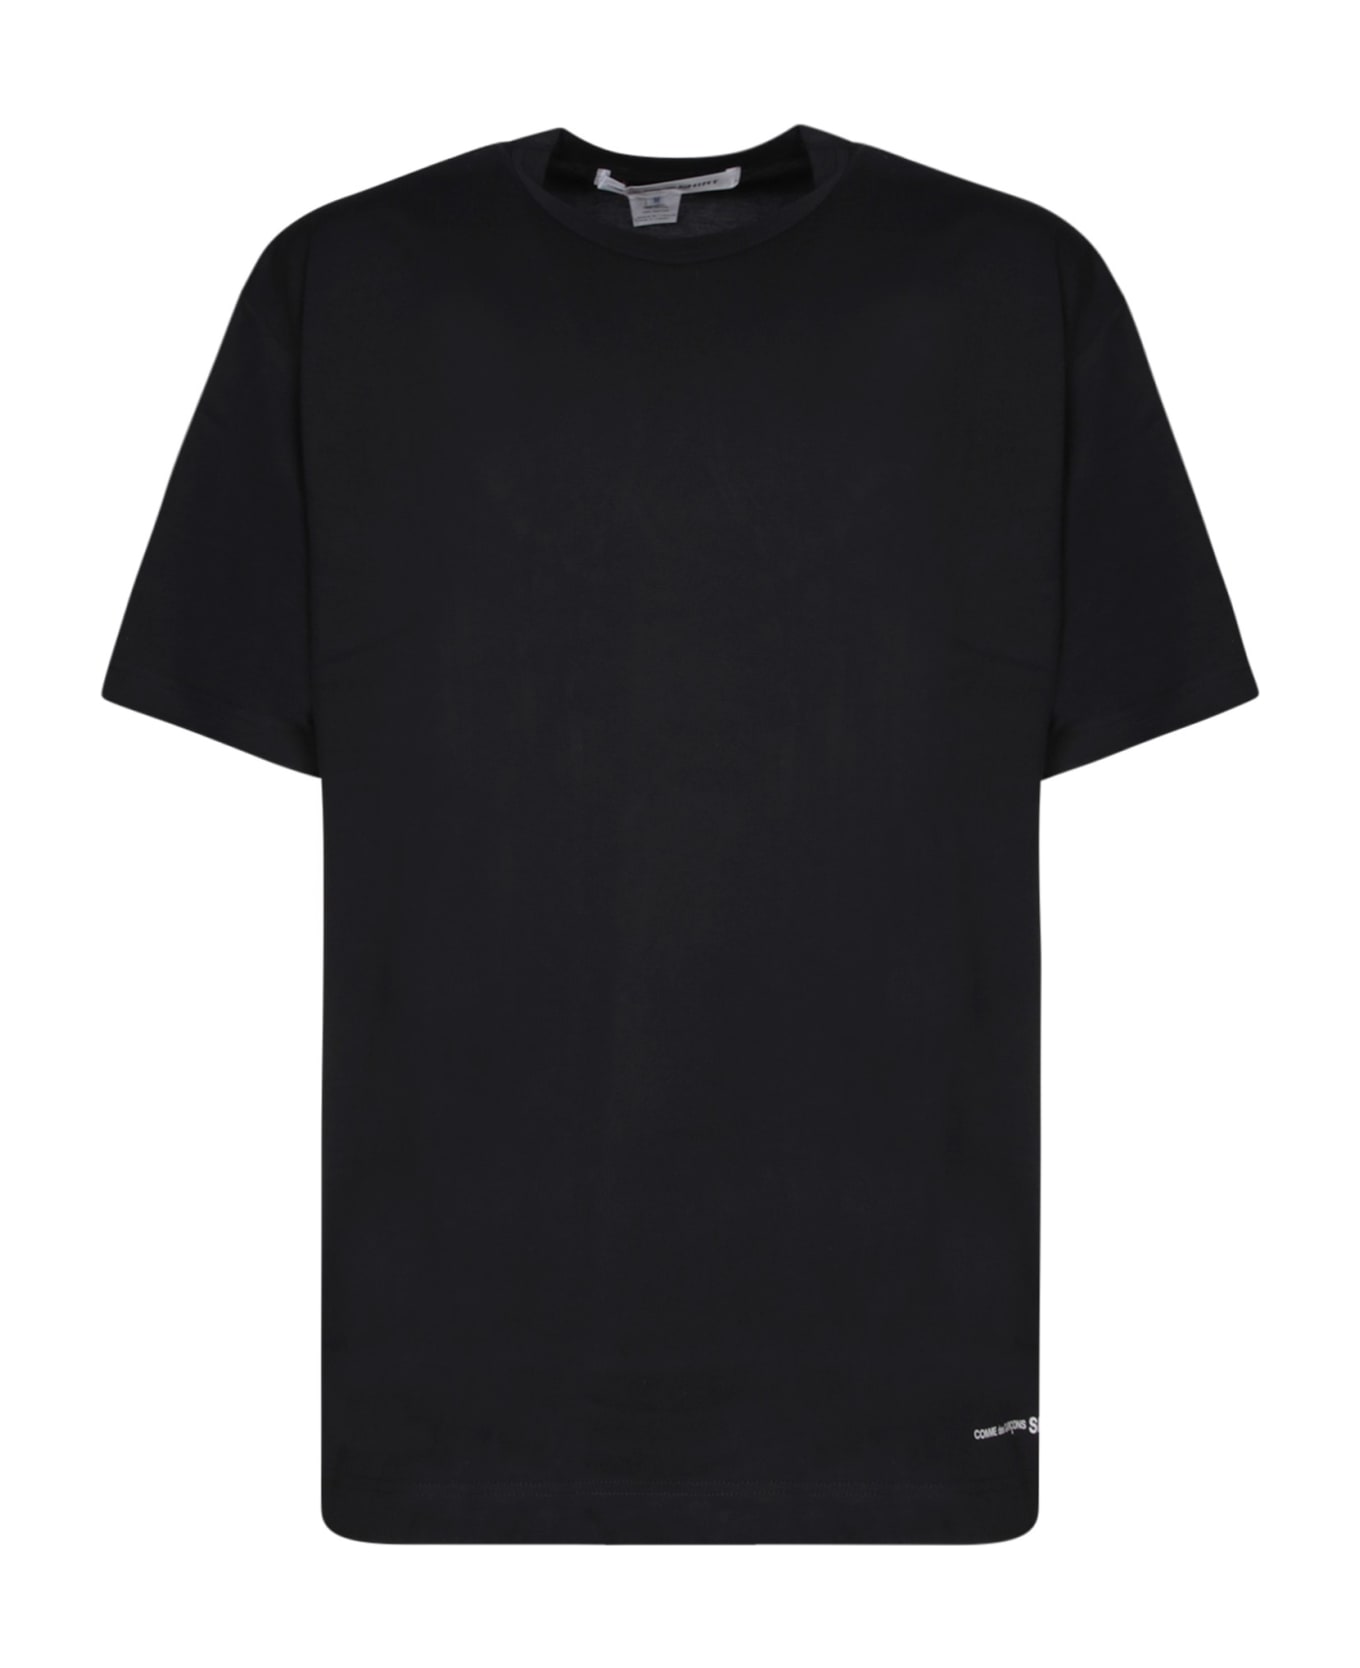 Comme des Garçons Shirt Oversize Black T-shirt - Black